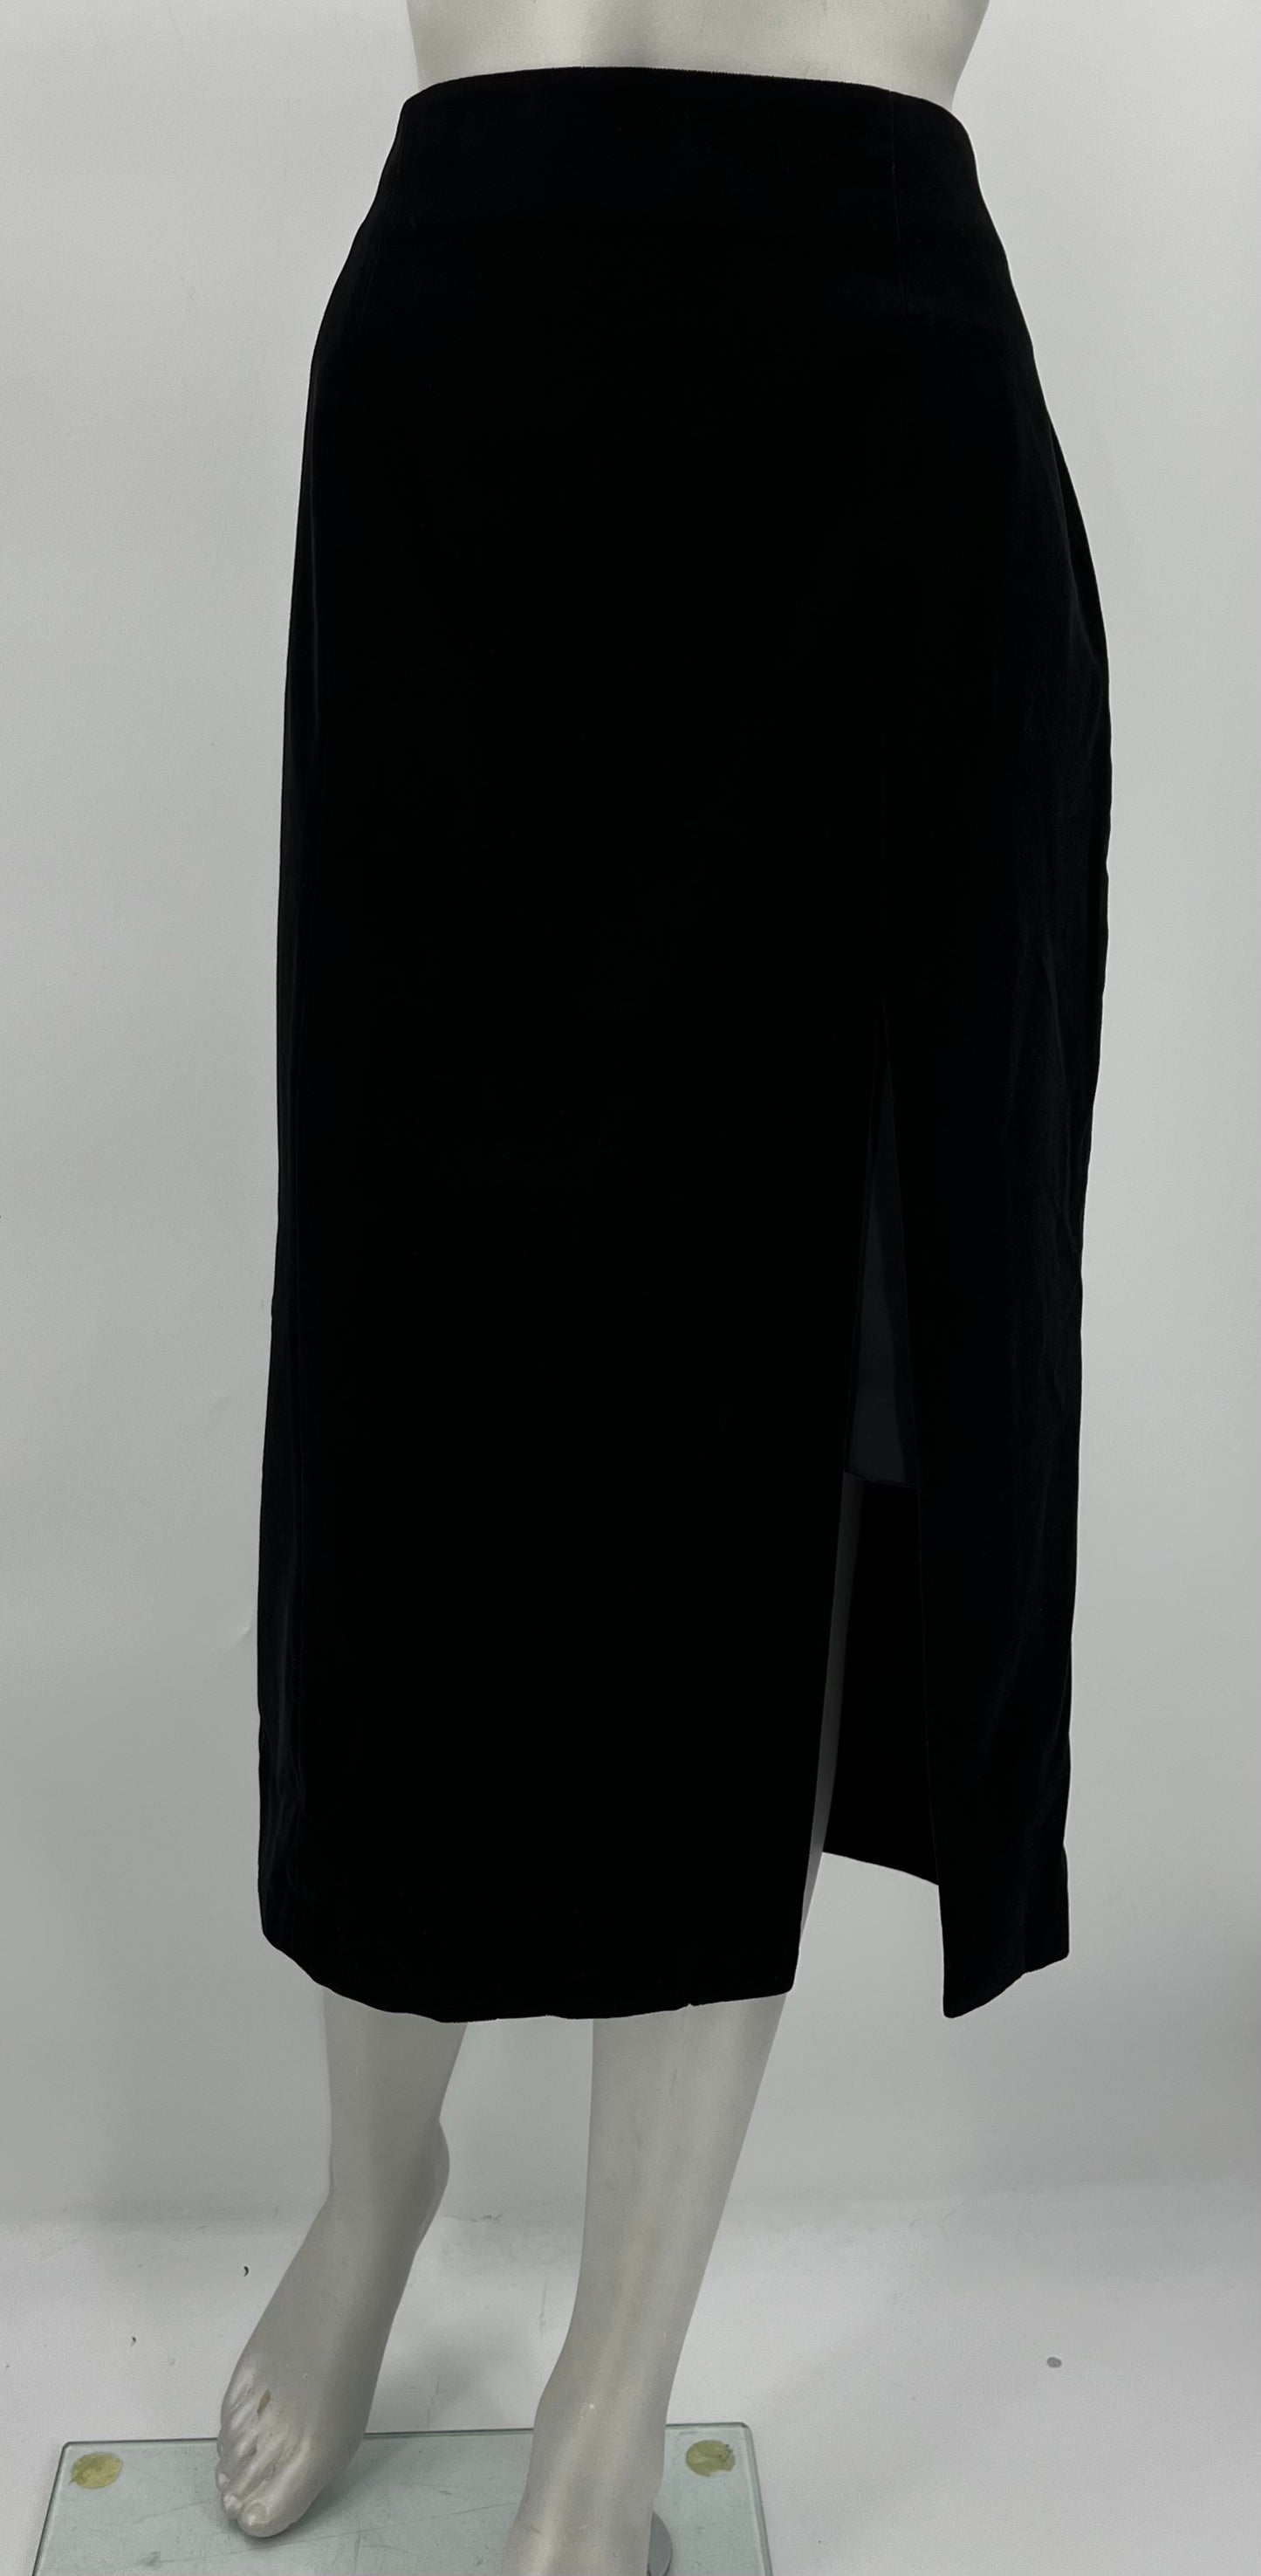 Carré, musta samettihame, 90-luku, vyöt.ymp. 82cm, kokoarvio 42